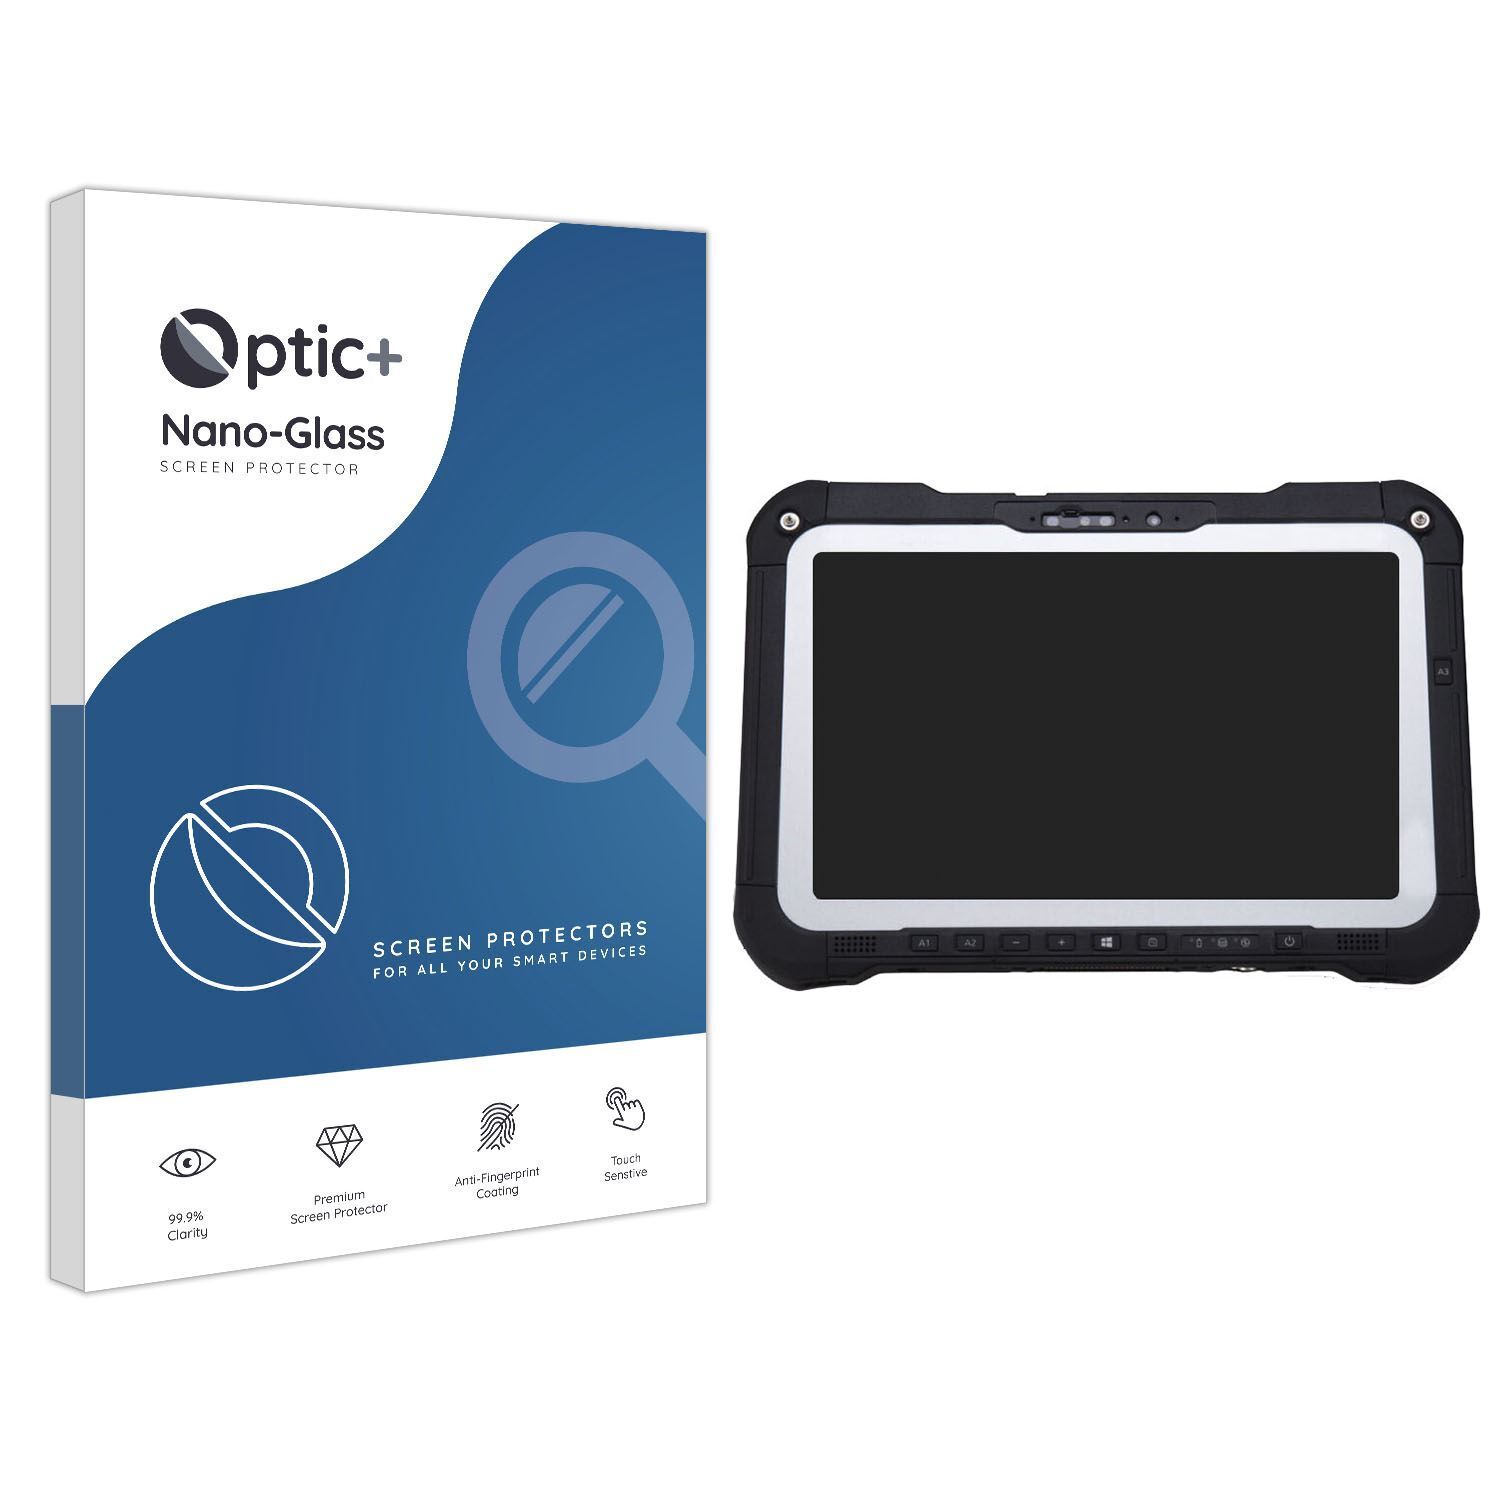 Optic+ Nano Glass Screen Protector for Panasonic Toughbook G2 (FZ-G2)